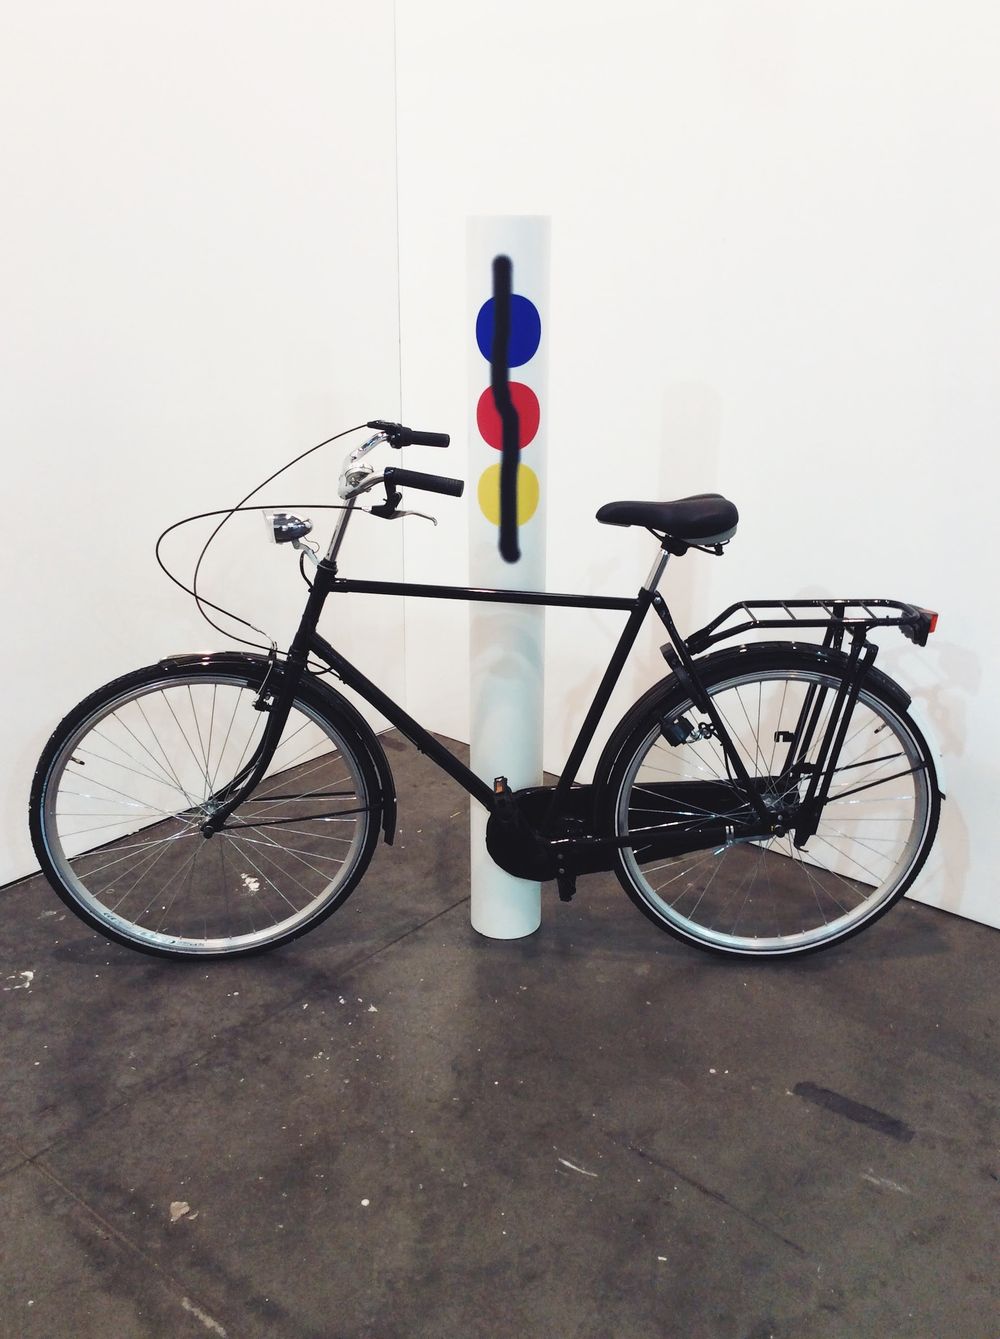 Mathieu Mercier, Untitled (Bike/primary aerosol), 2012